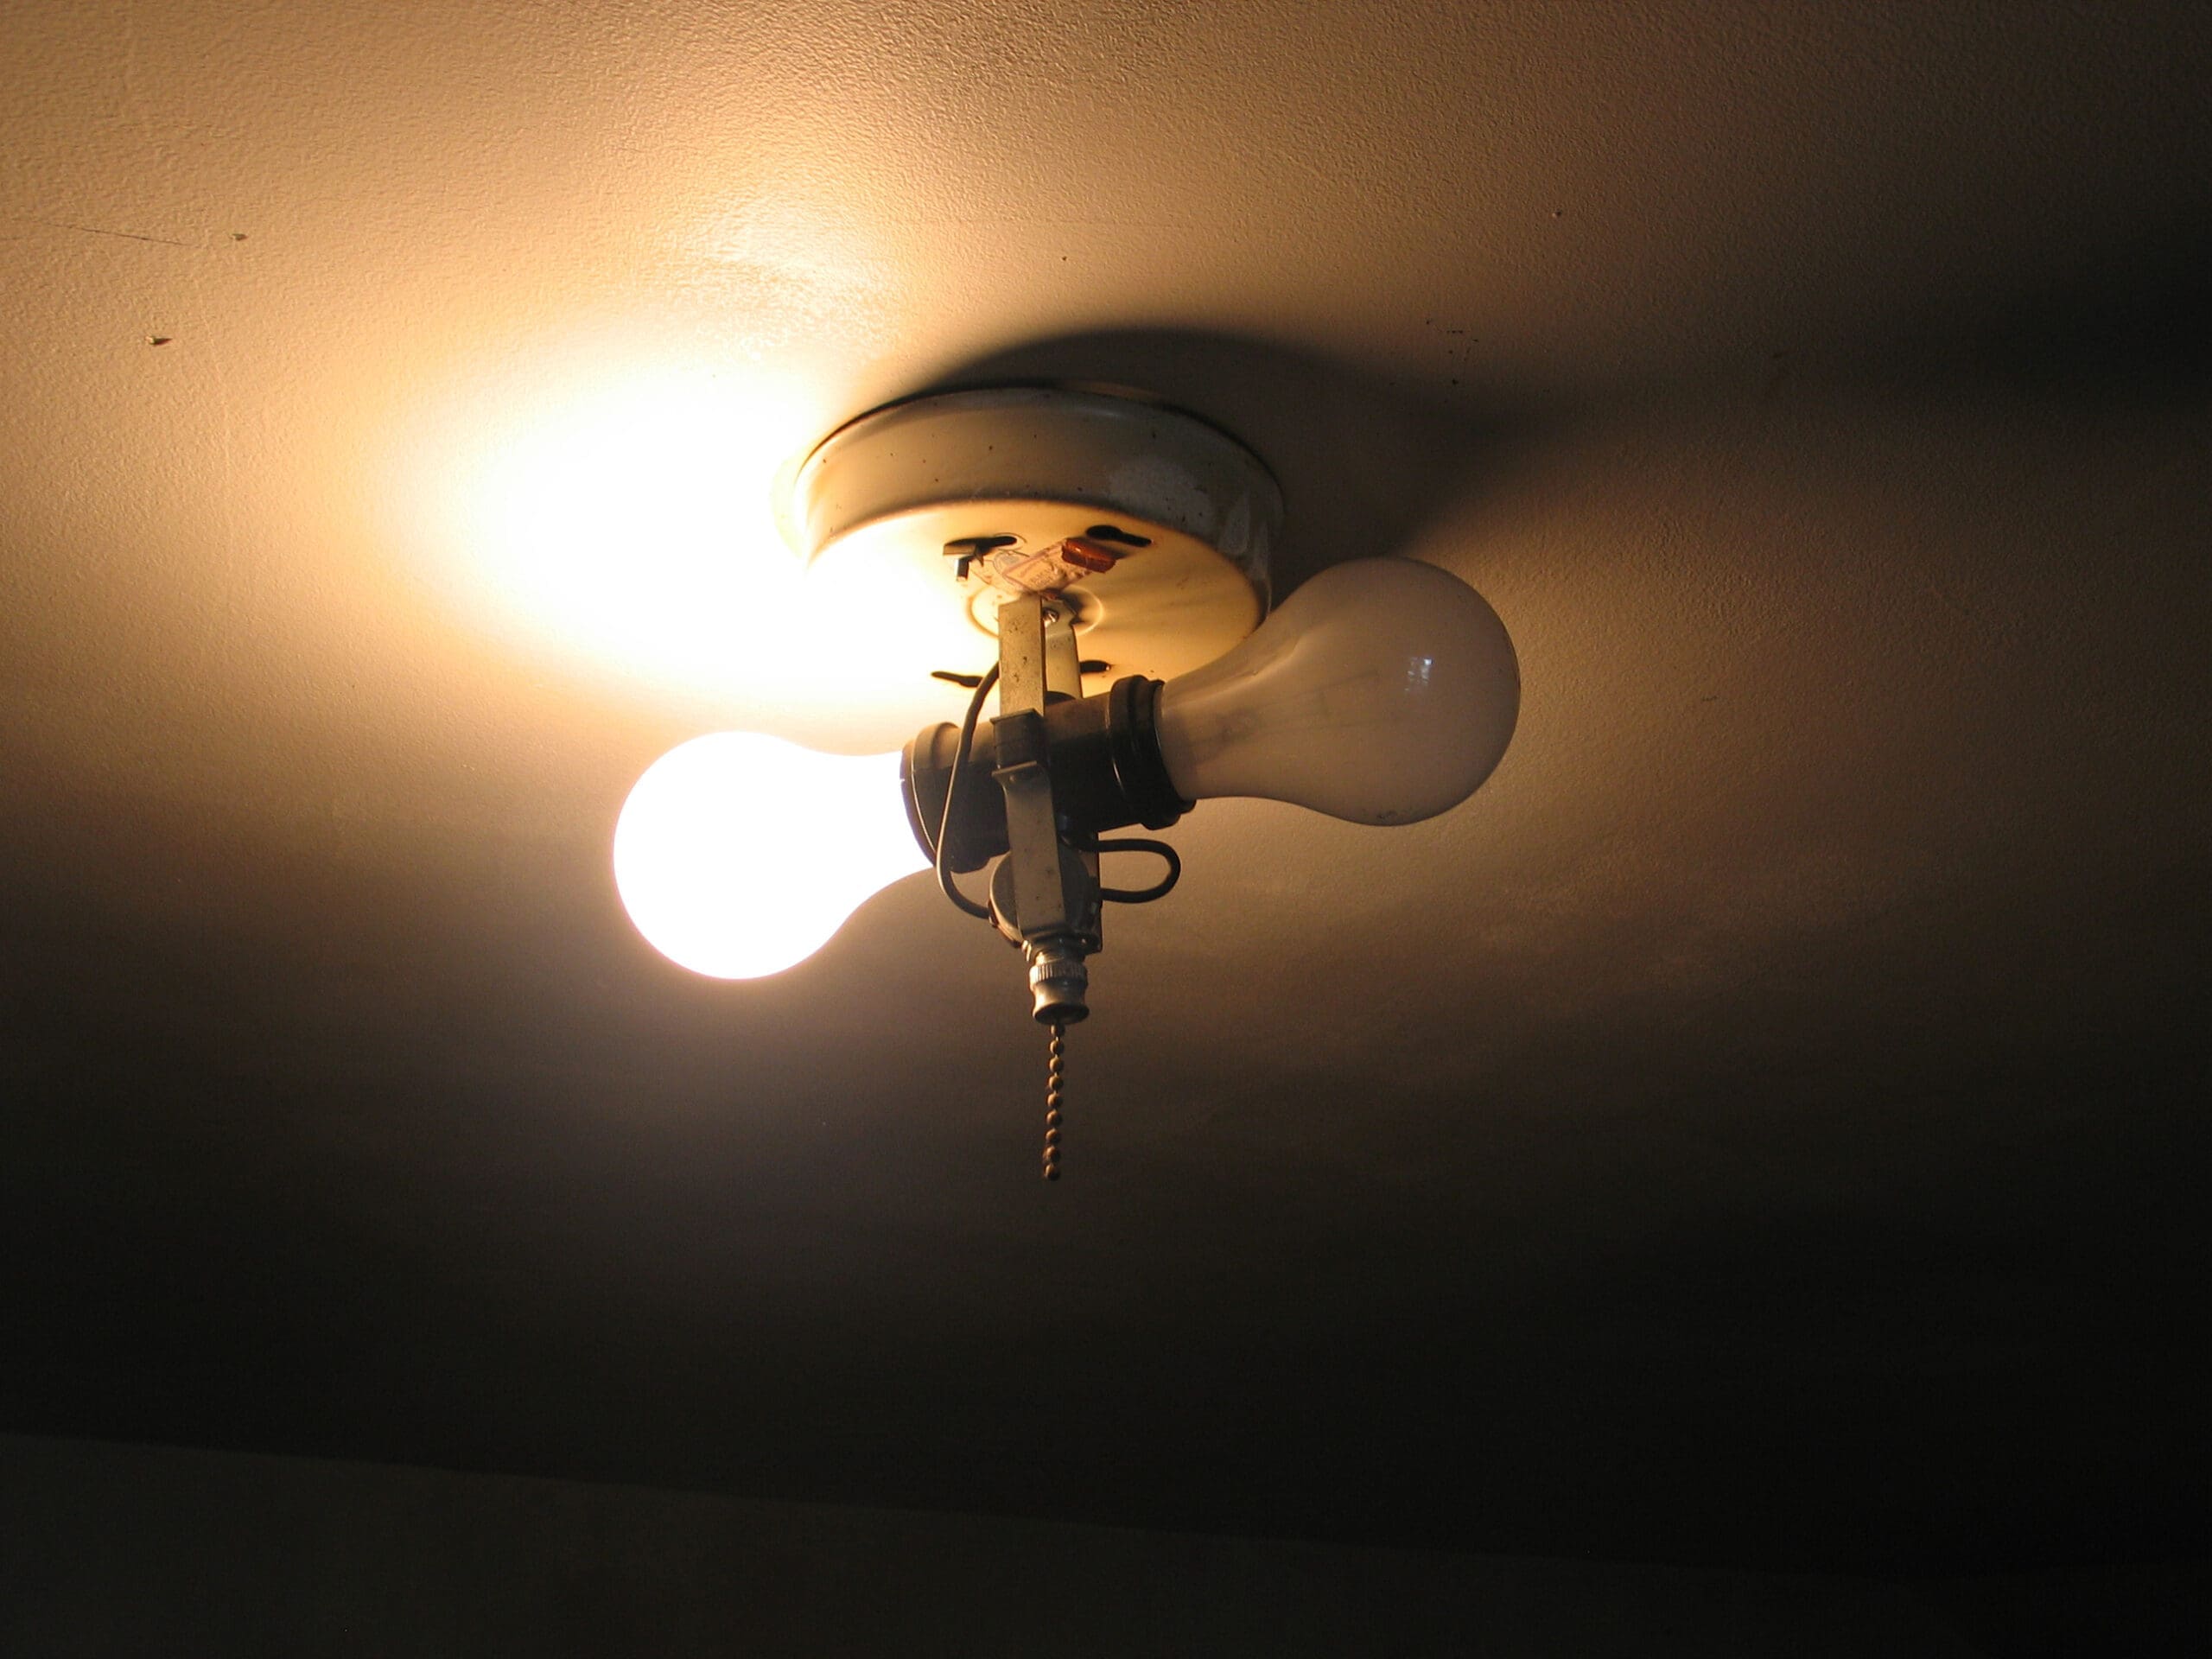 Two Light Bulbs